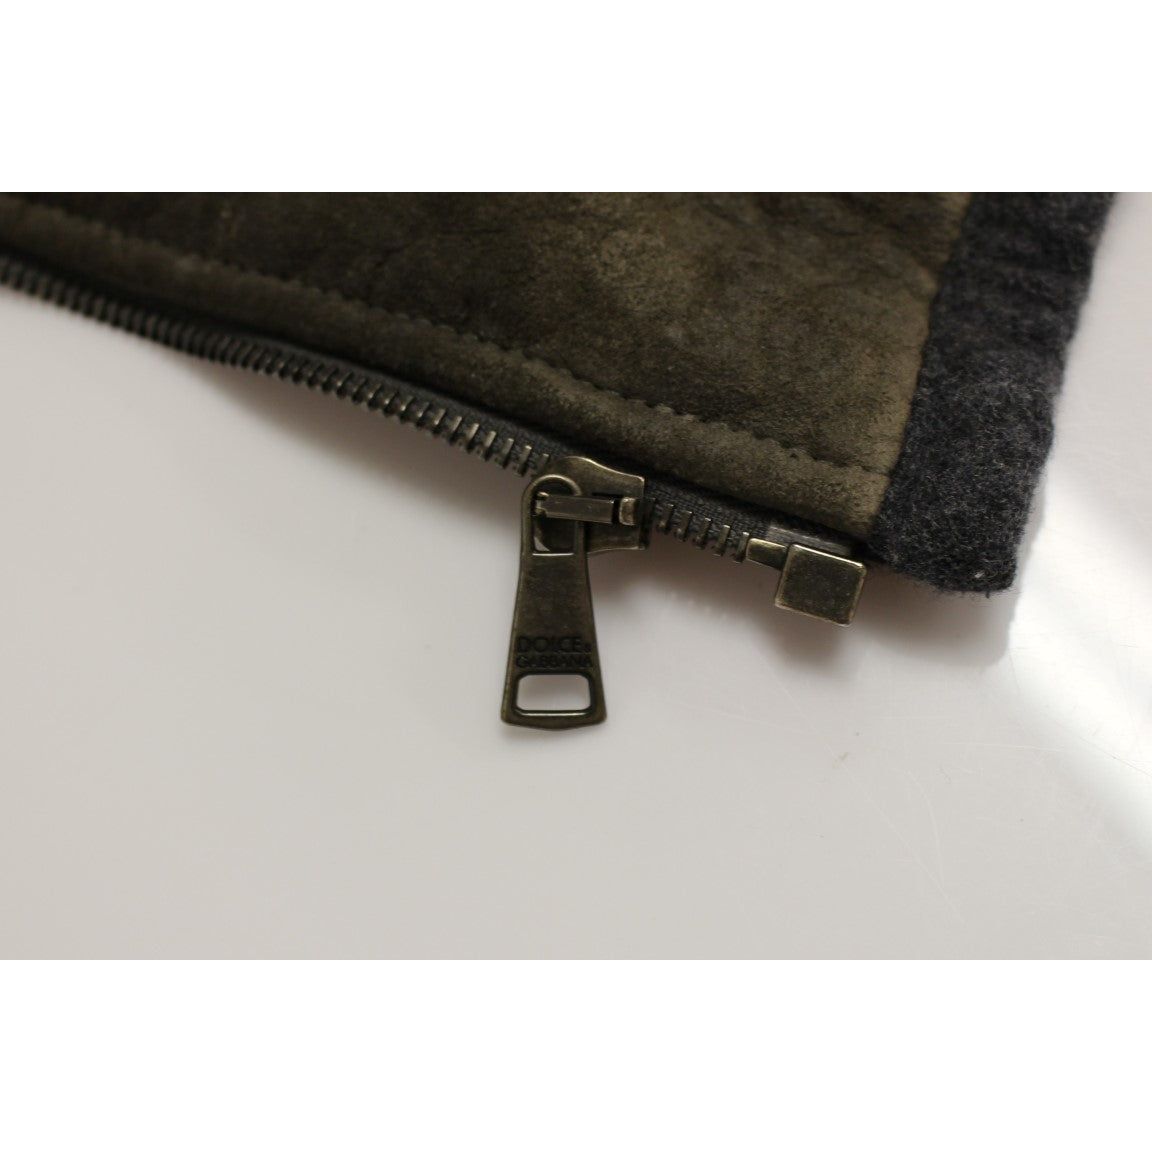 Dolce & Gabbana Elegant Leather & Wool Blend Jacket brown-gray-leather-jacket-coat Coats & Jackets 54860-brown-gray-leather-jacket-coat-7.jpg